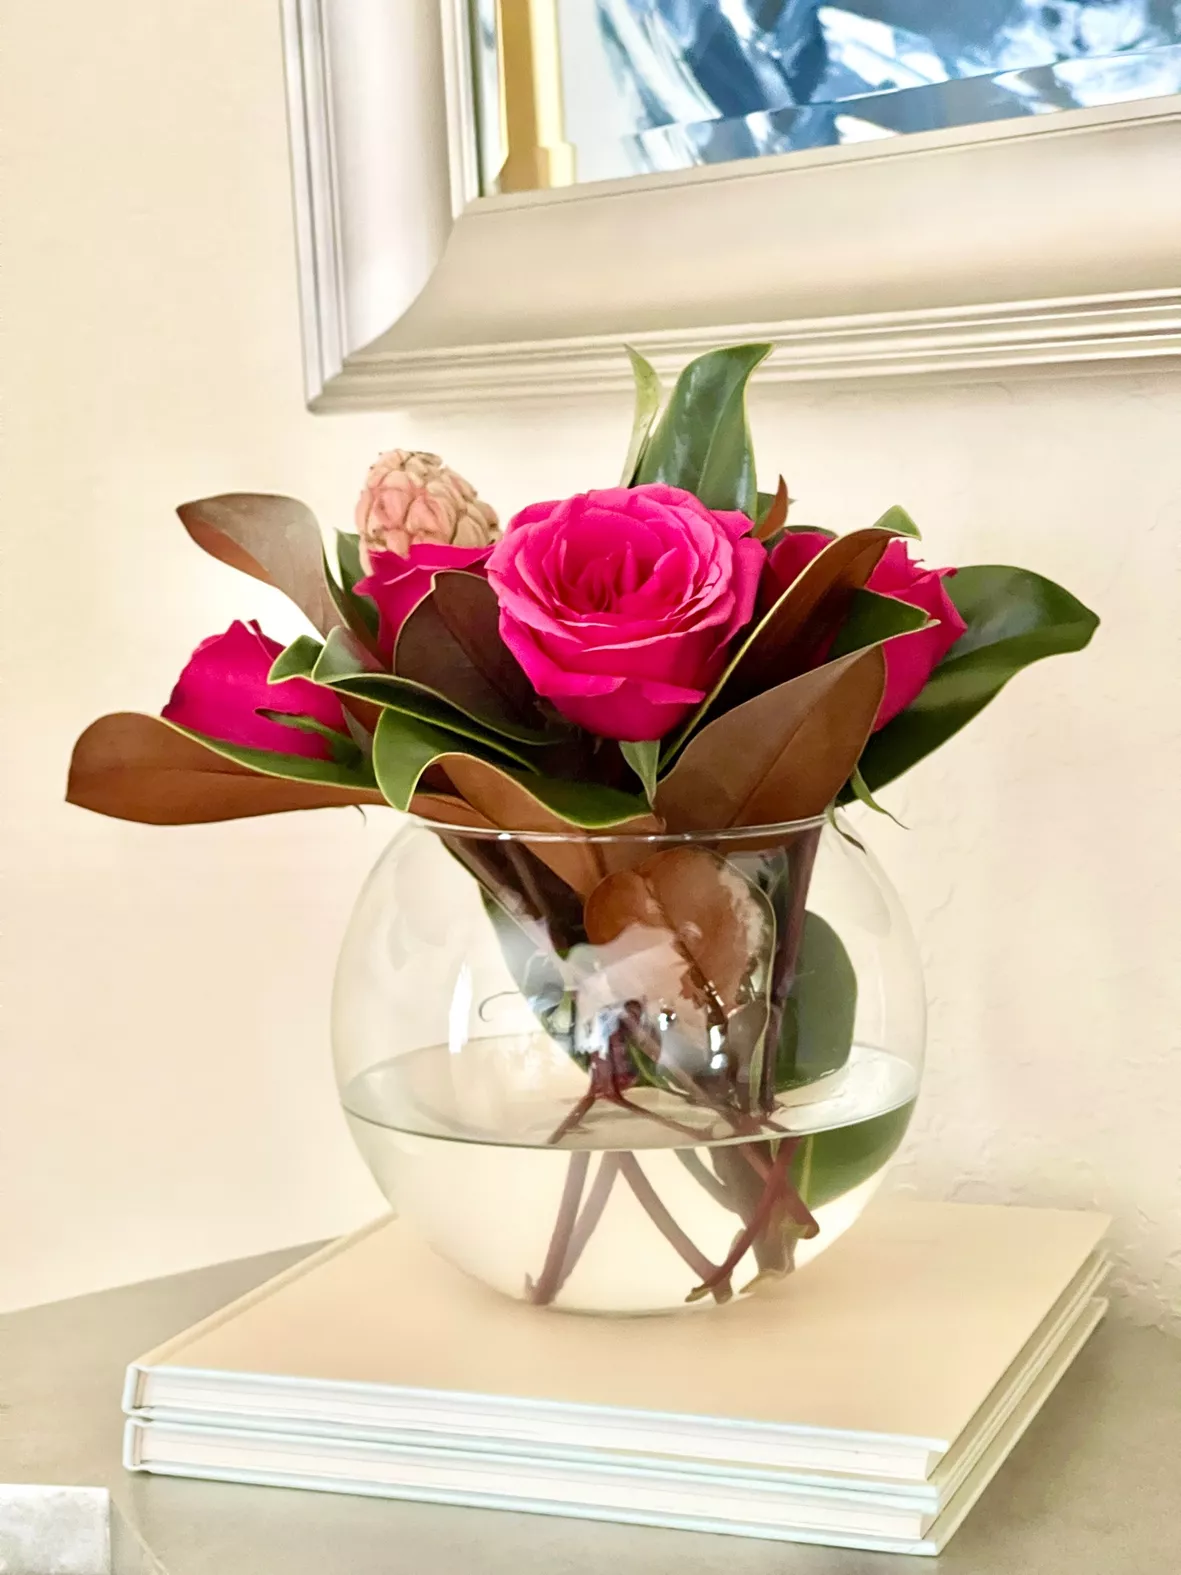  Floral Supply Online 10 5/8 Spring Garden Vase and Flower  Guide Booklet- Decorative Glass Flower Vase for Floral Arrangements,  Weddings, Home Decor or Office. (Clear) : Home & Kitchen